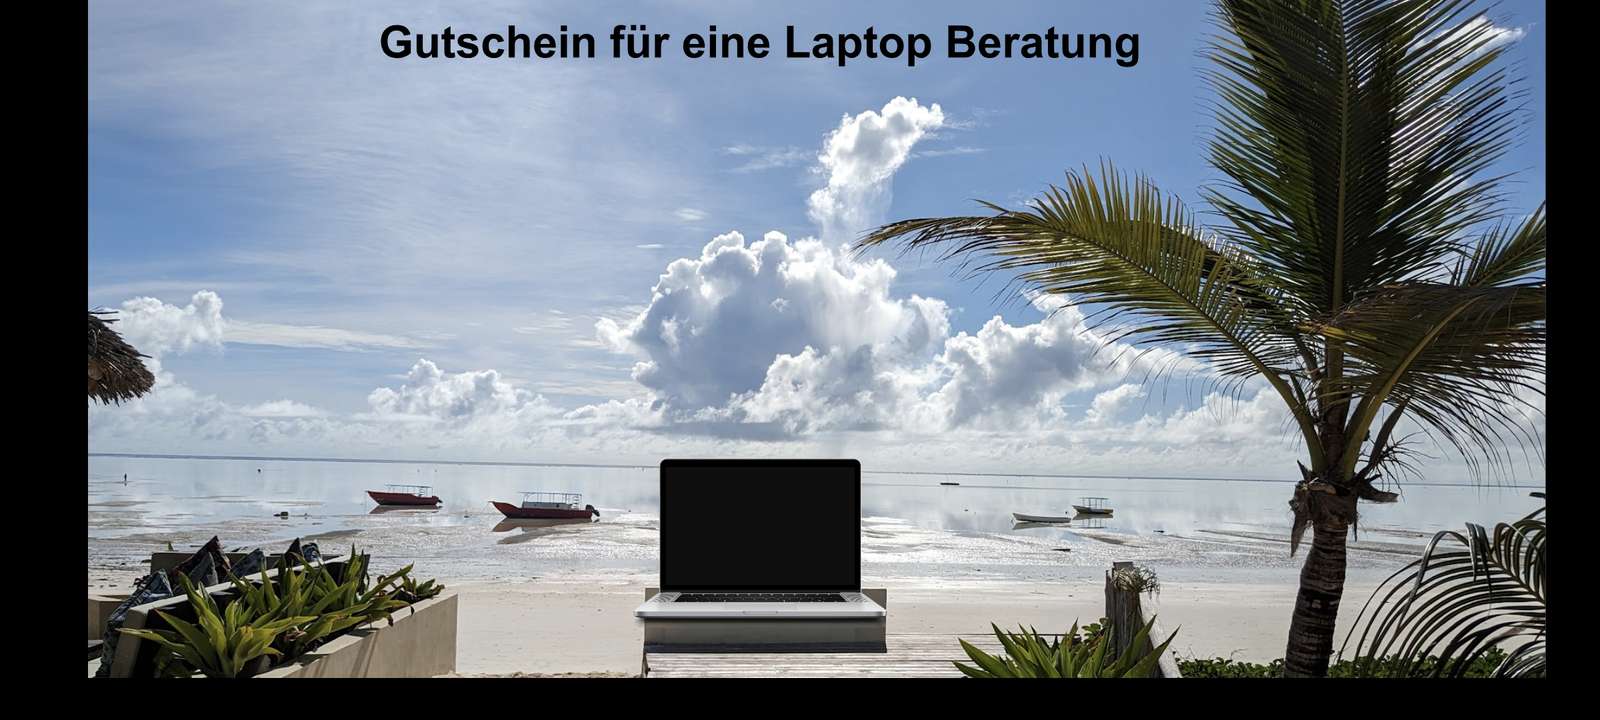 Laptop a strandon puzzle online fotóról